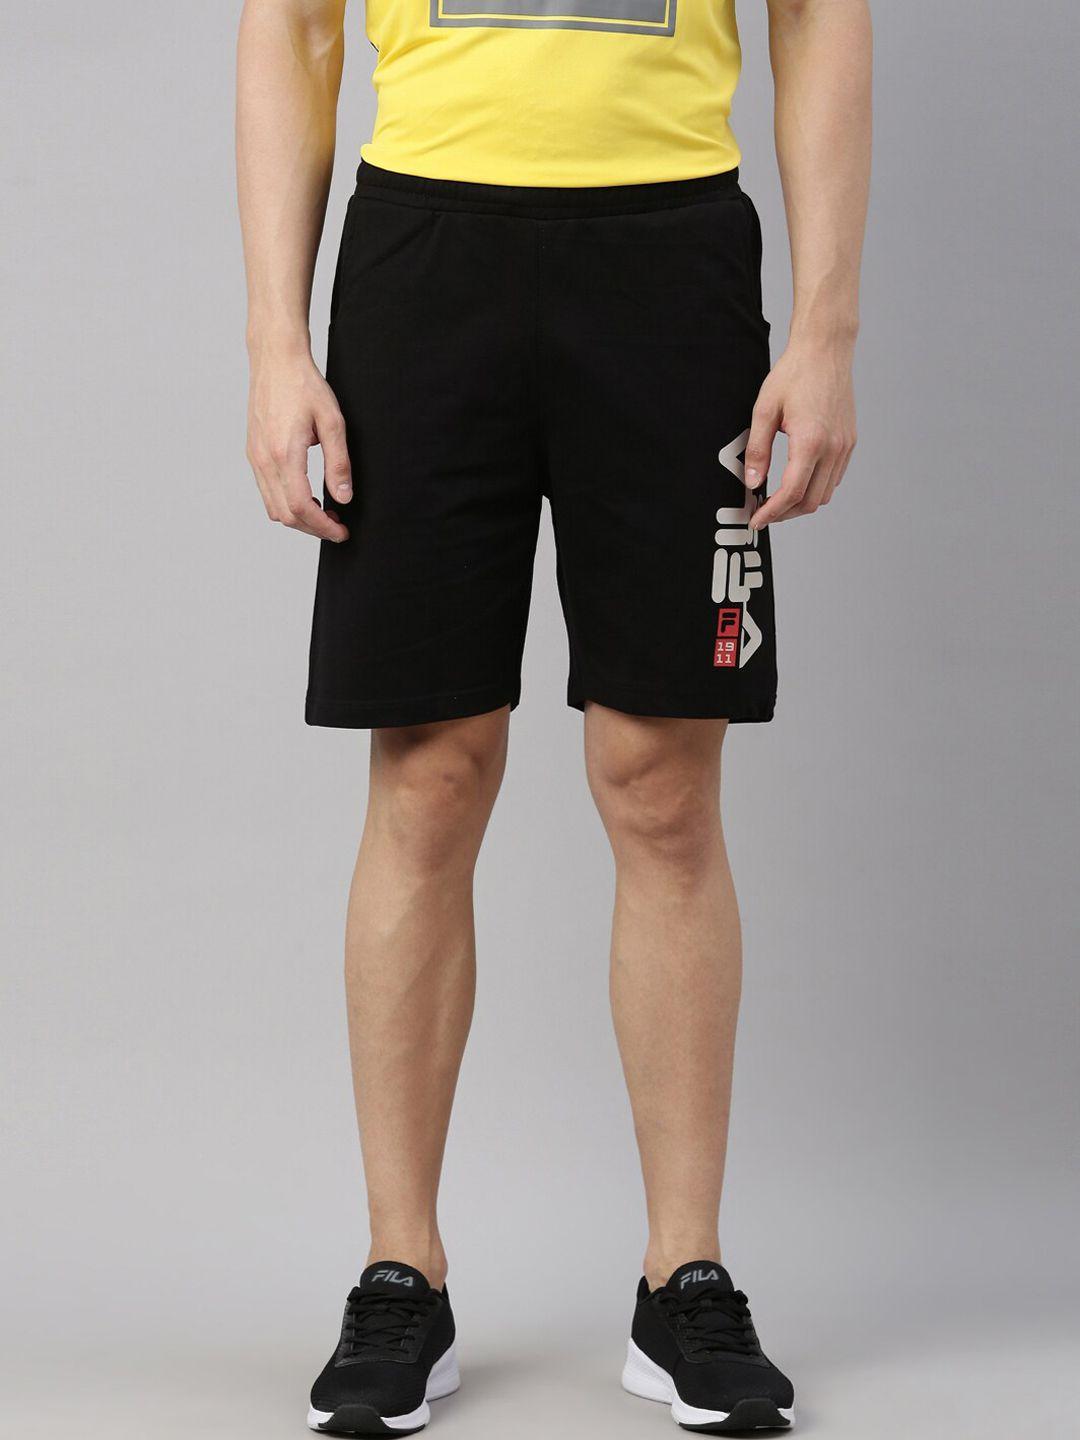 fila-men-black-cotton-training-or-gym-shorts